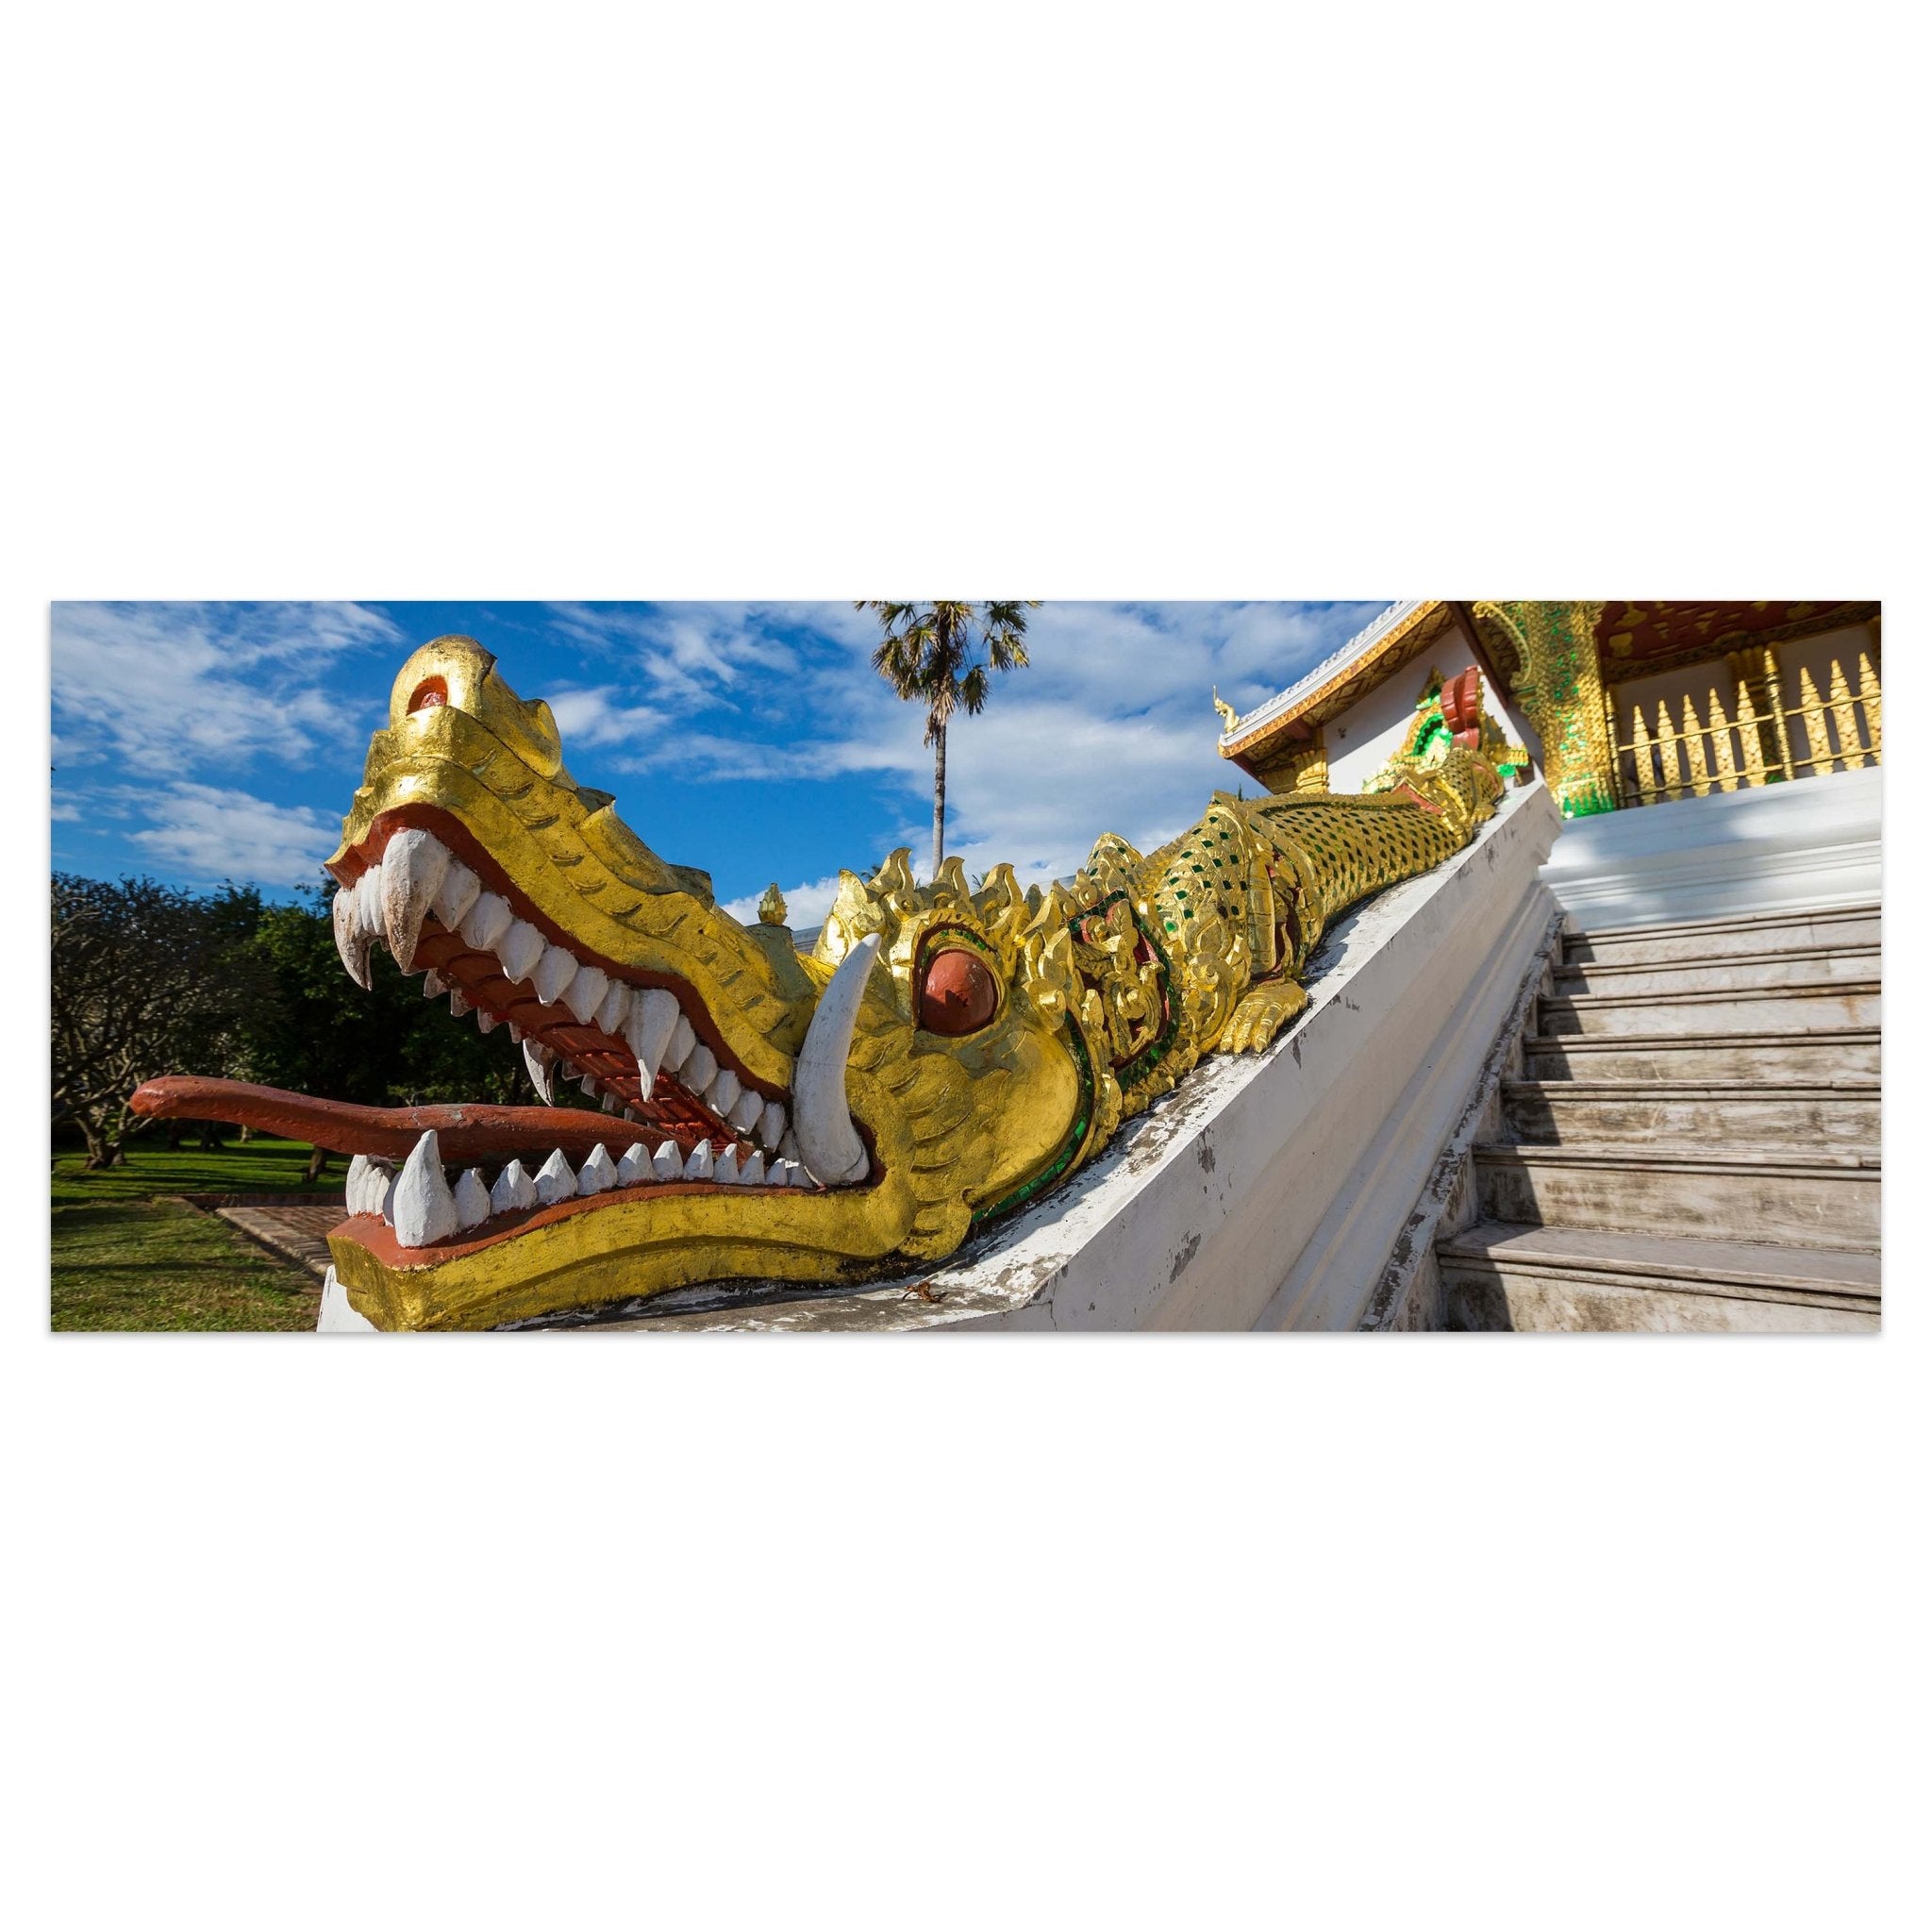 Leinwandbild Tempel in Luang Prabang M0802 kaufen - Bild 1